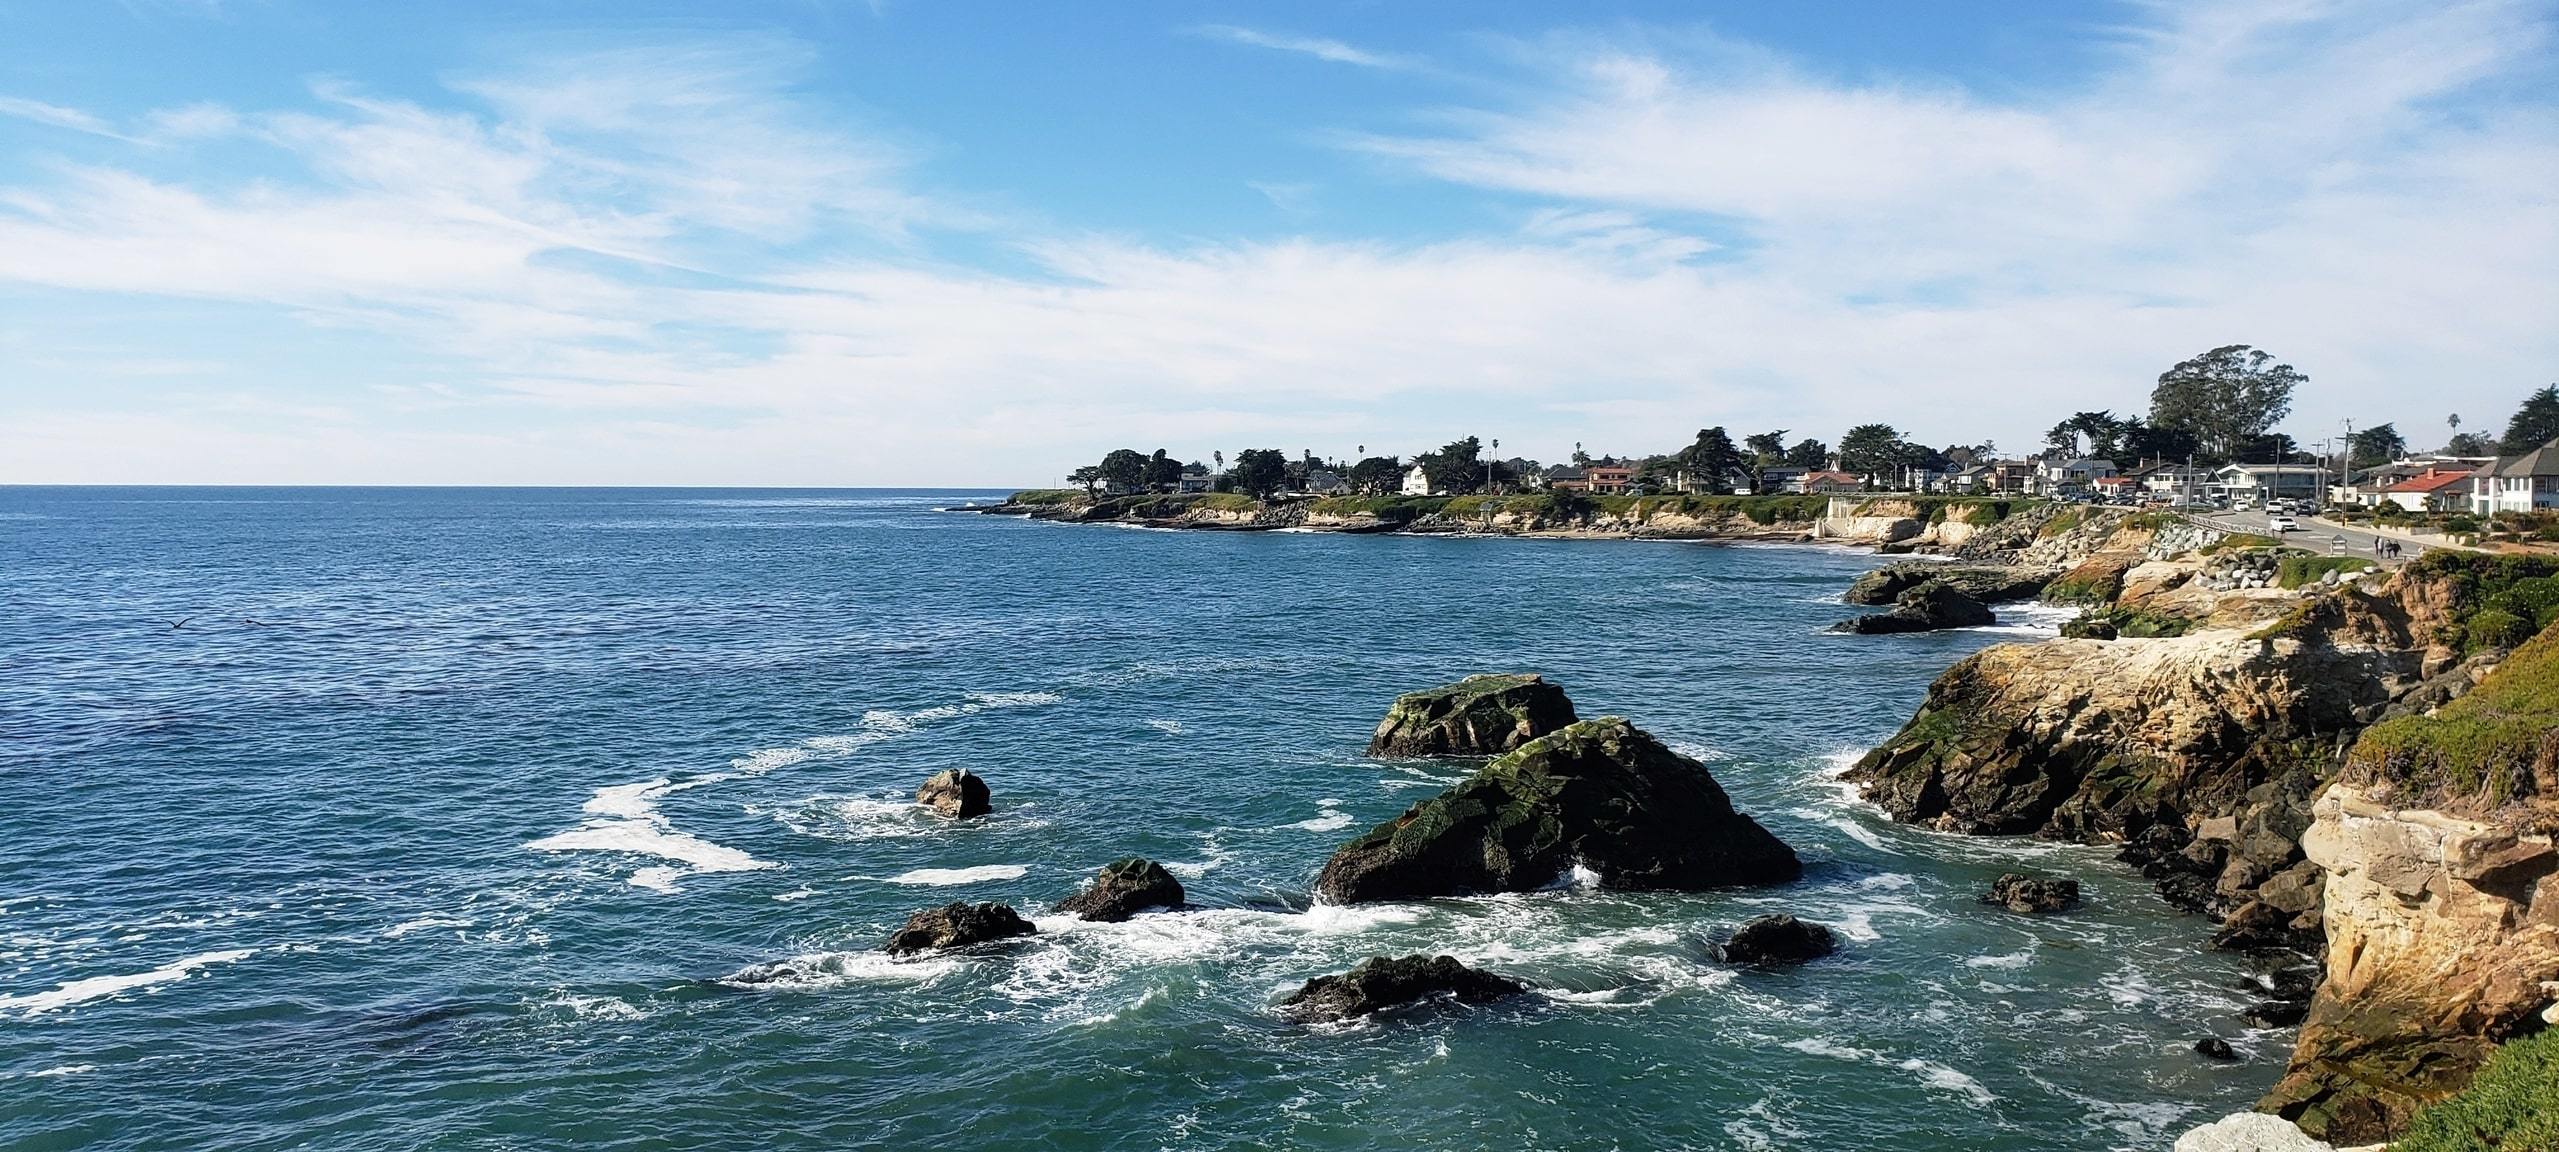 Homes overlooking ocean and rocks on West Cliff Drive, Santa Cruz